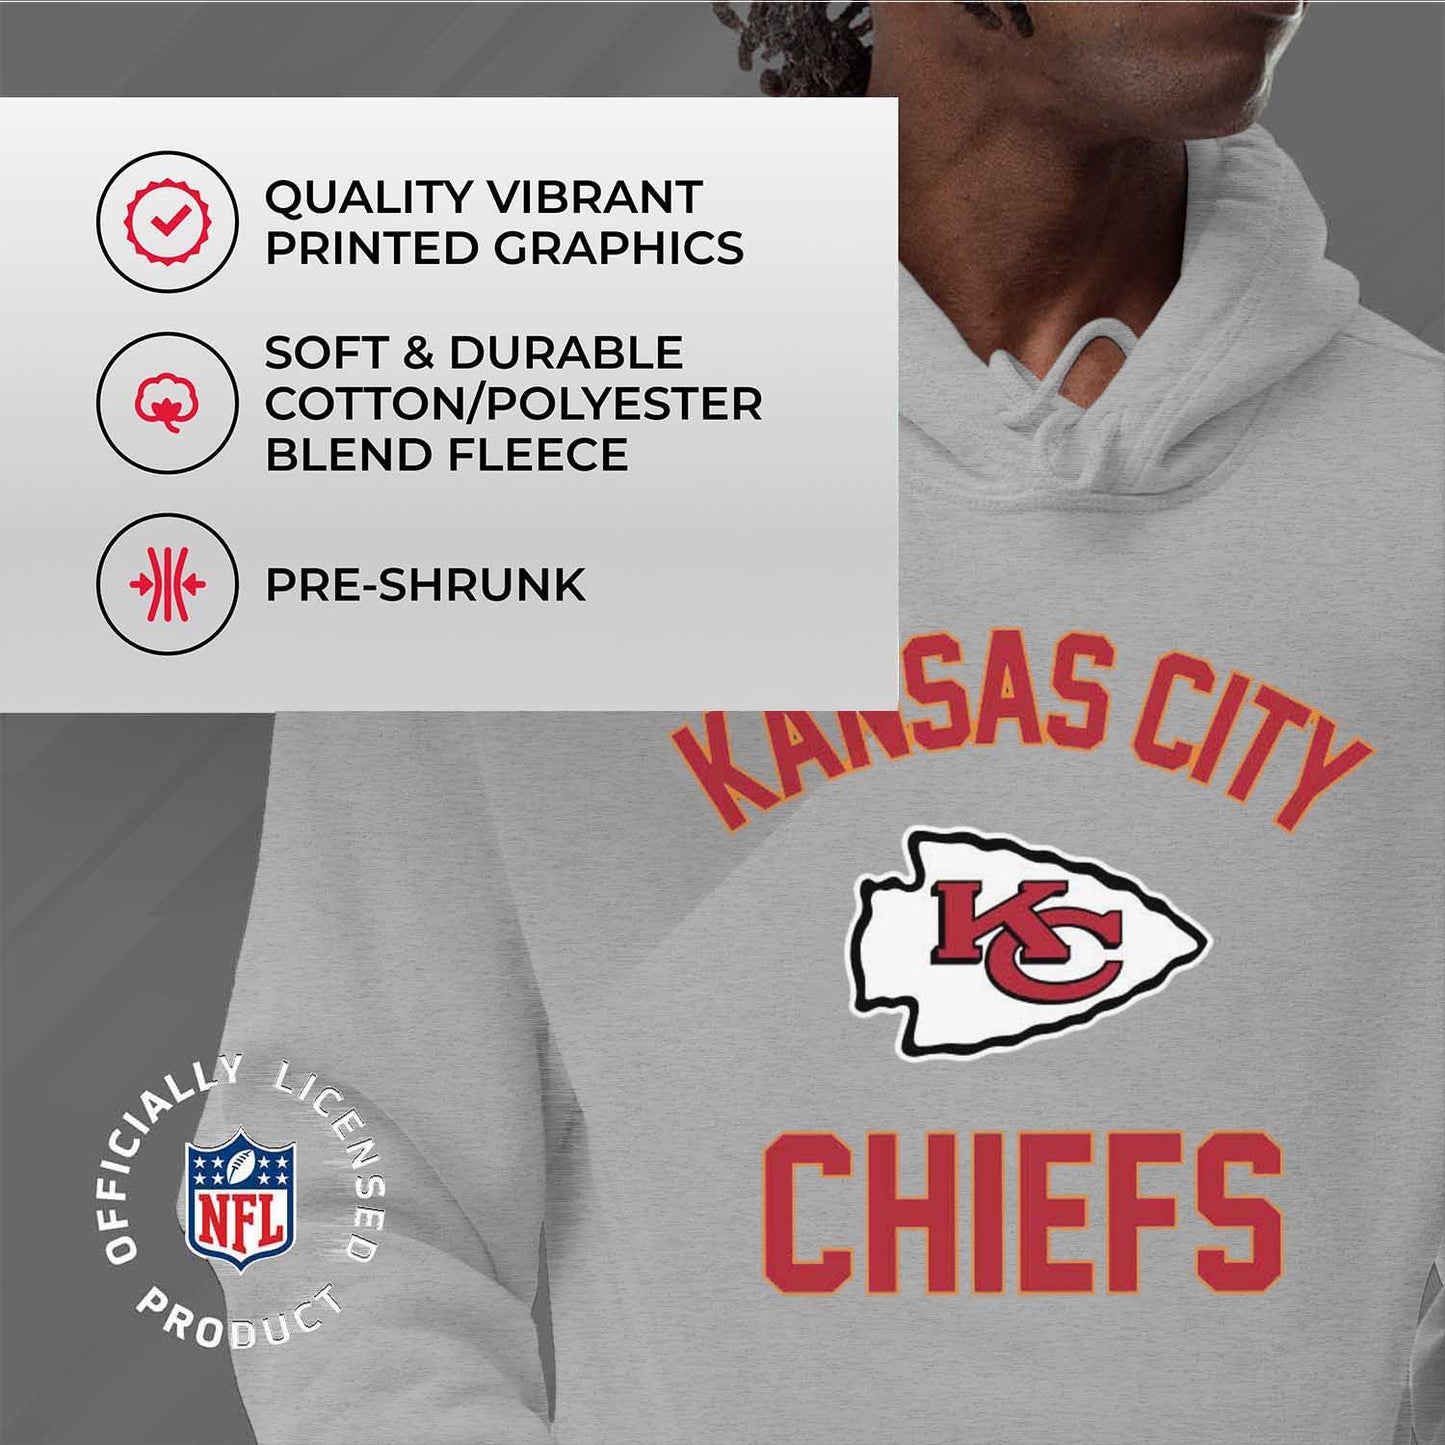 Kansas City Chiefs NFL Adult Gameday Hooded Sweatshirt - Sport Gray